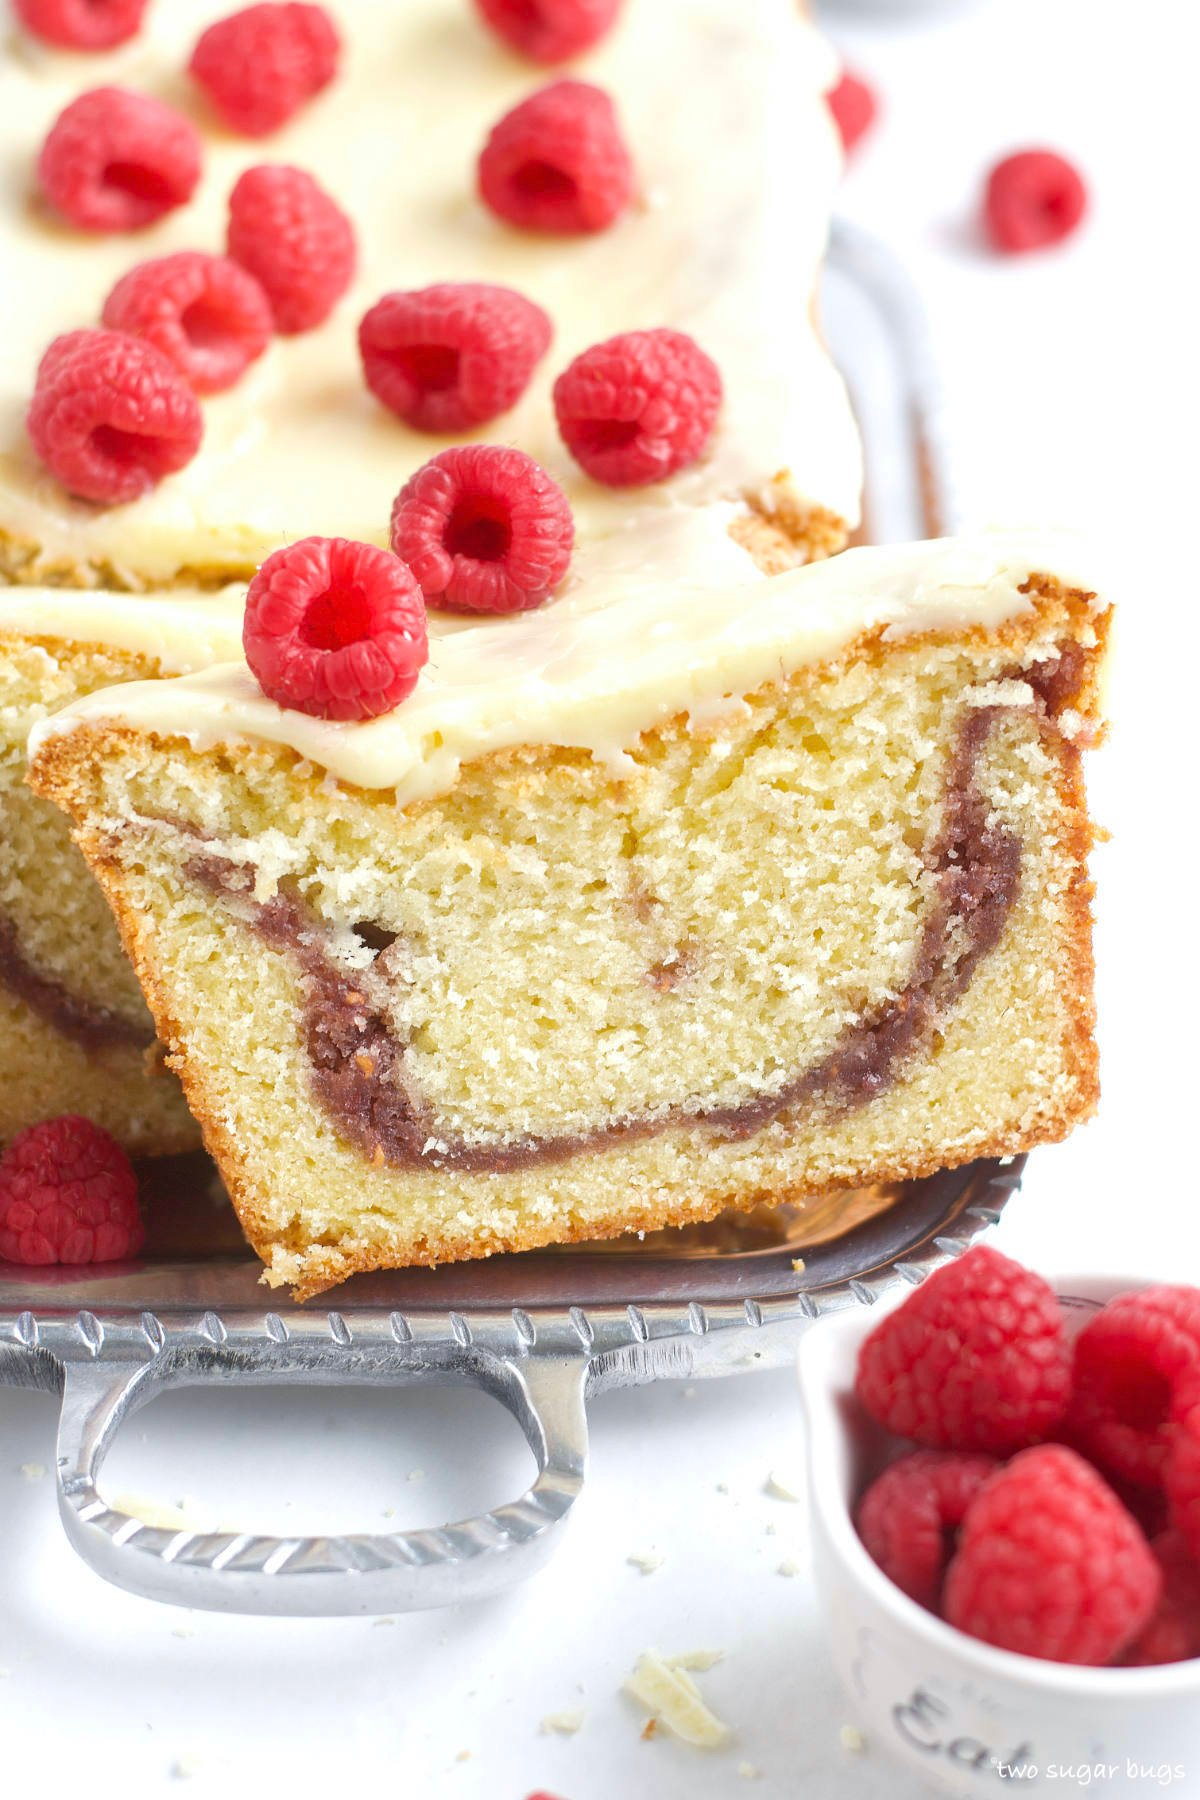 cut slice of cake with fresh raspberries on top